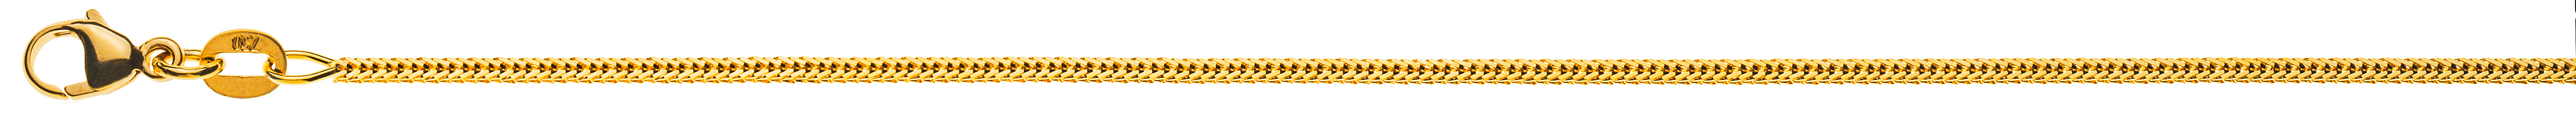 AURONOS Prestige Necklace yellow gold 18K foxtail diamond 45cm 1.2mm